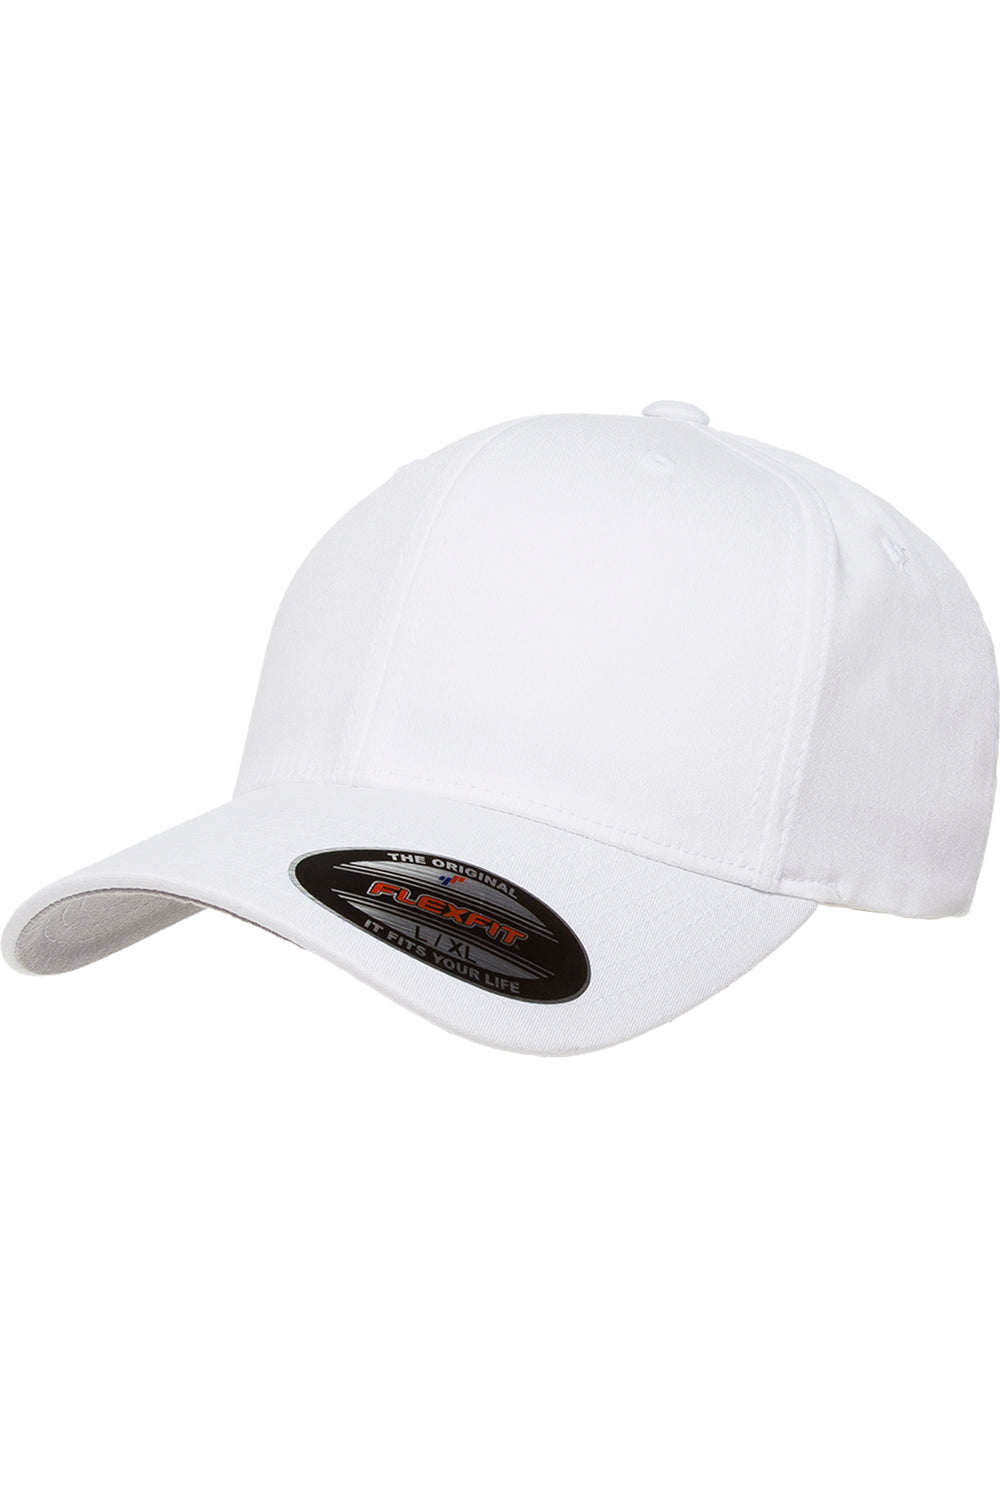 Flexfit 5001 Mens Stretch Fit Hat White Front